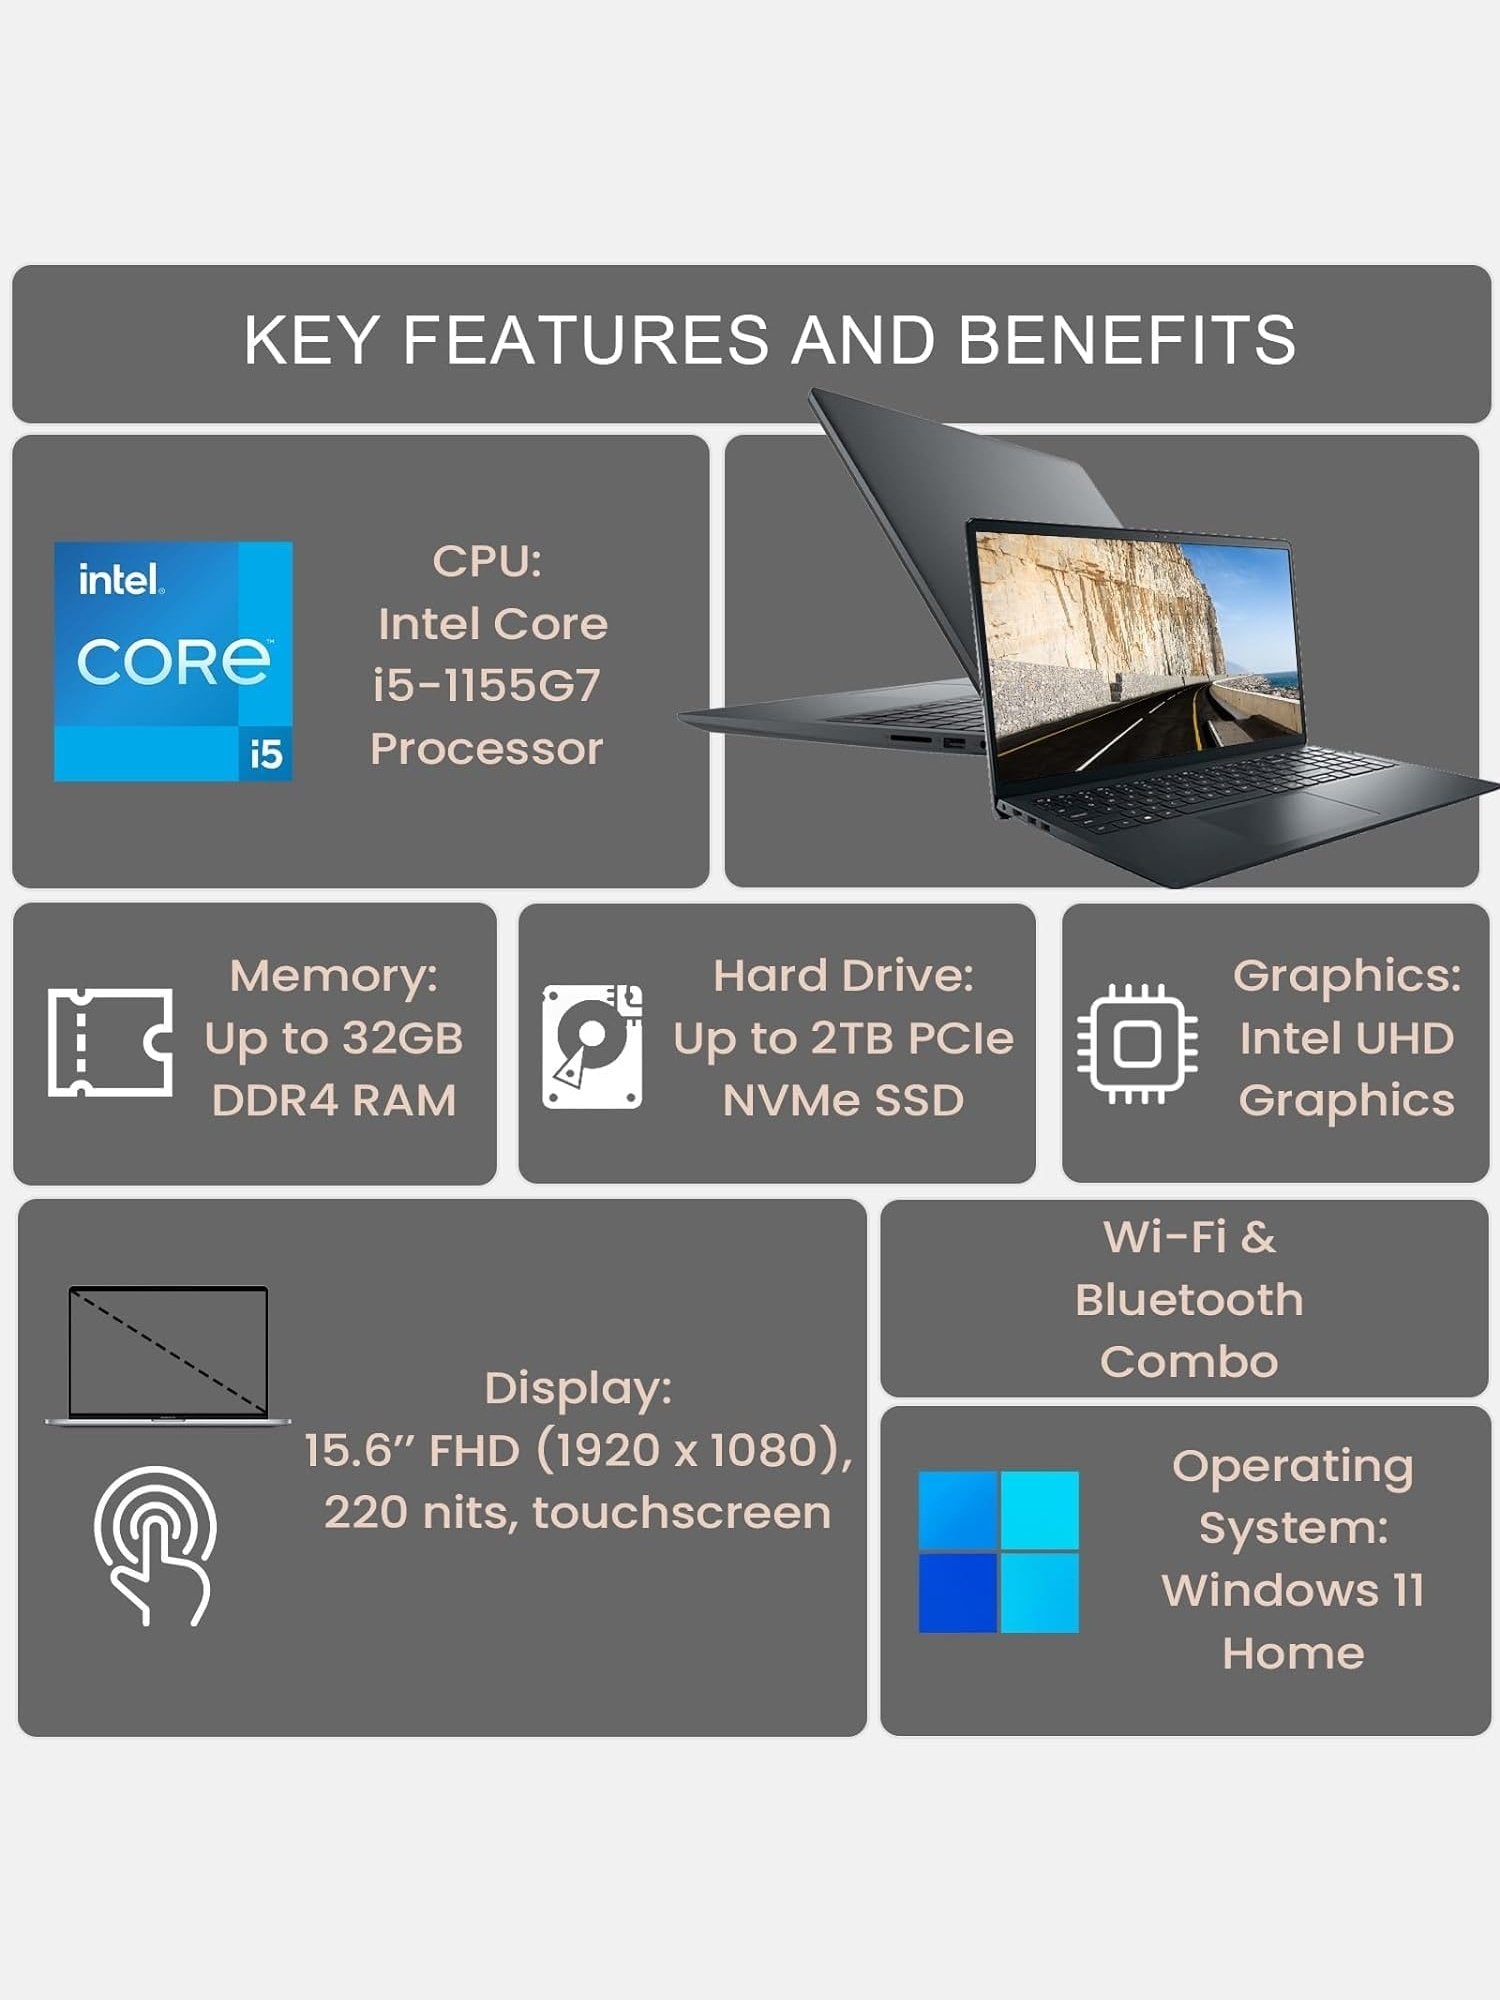 Dell Newest Inspiron 15 3511 Laptop, 15.6" FHD Touchscreen, Intel Core i5-1035G1, 12GB RAM, 256GB PCIe NVMe M.2 SSD, SD Card Reader, Webcam, HDMI, WiFi, Windows 11 Home, Black